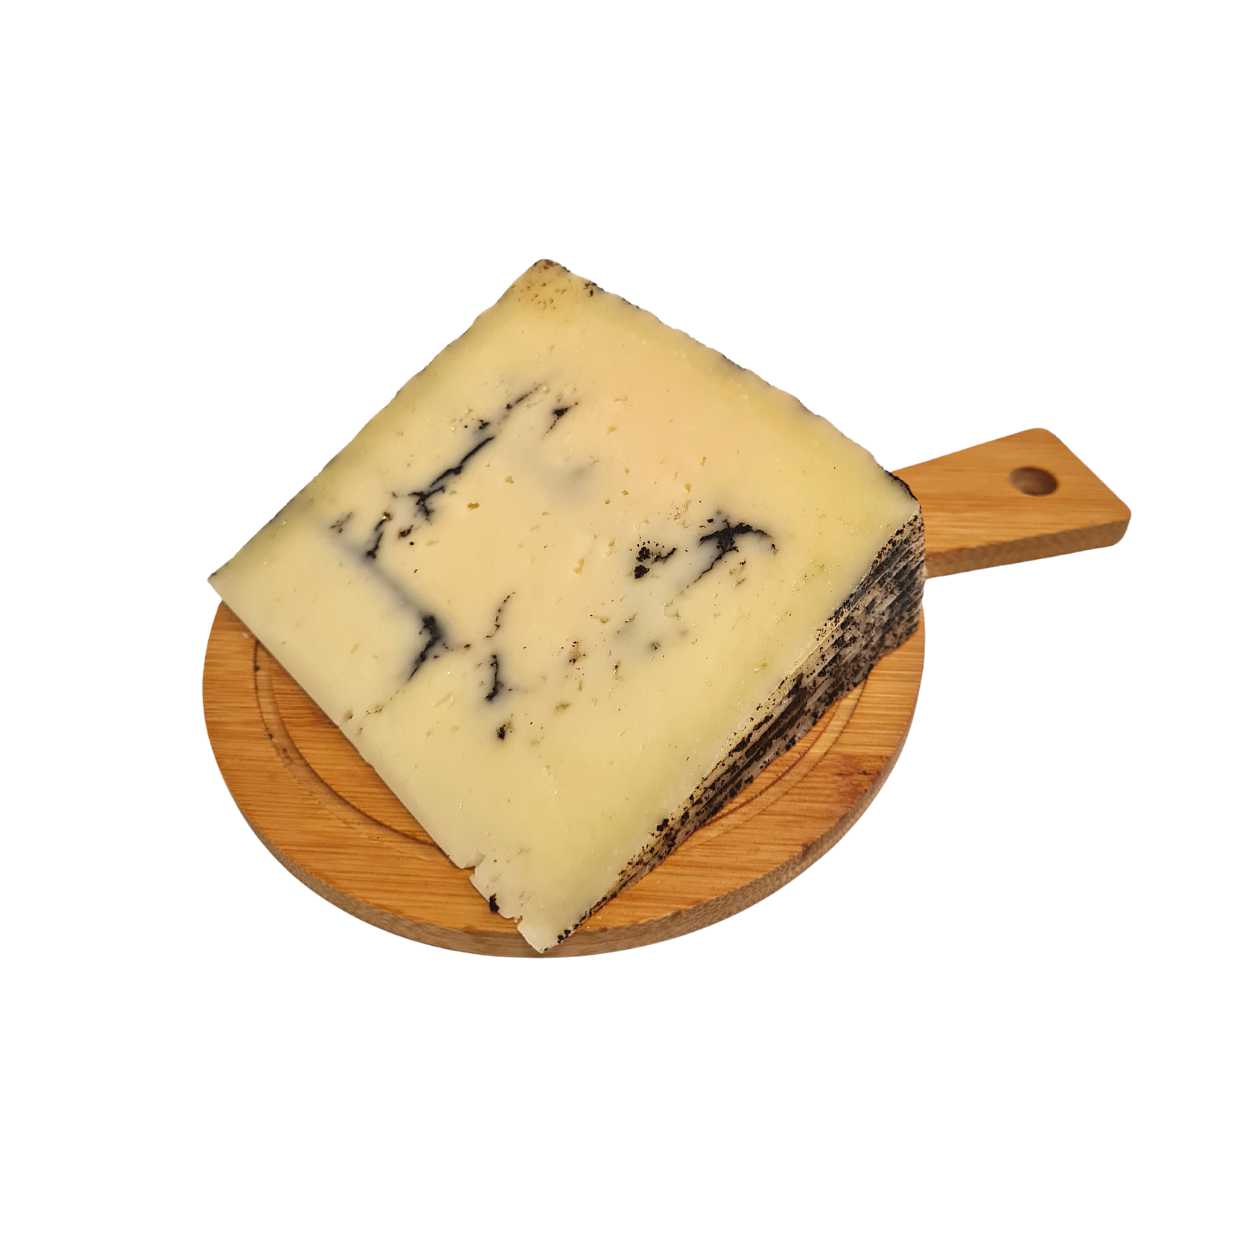 Manchego Cheese with Black Truffle. 250 g - Mantequerías Bravo